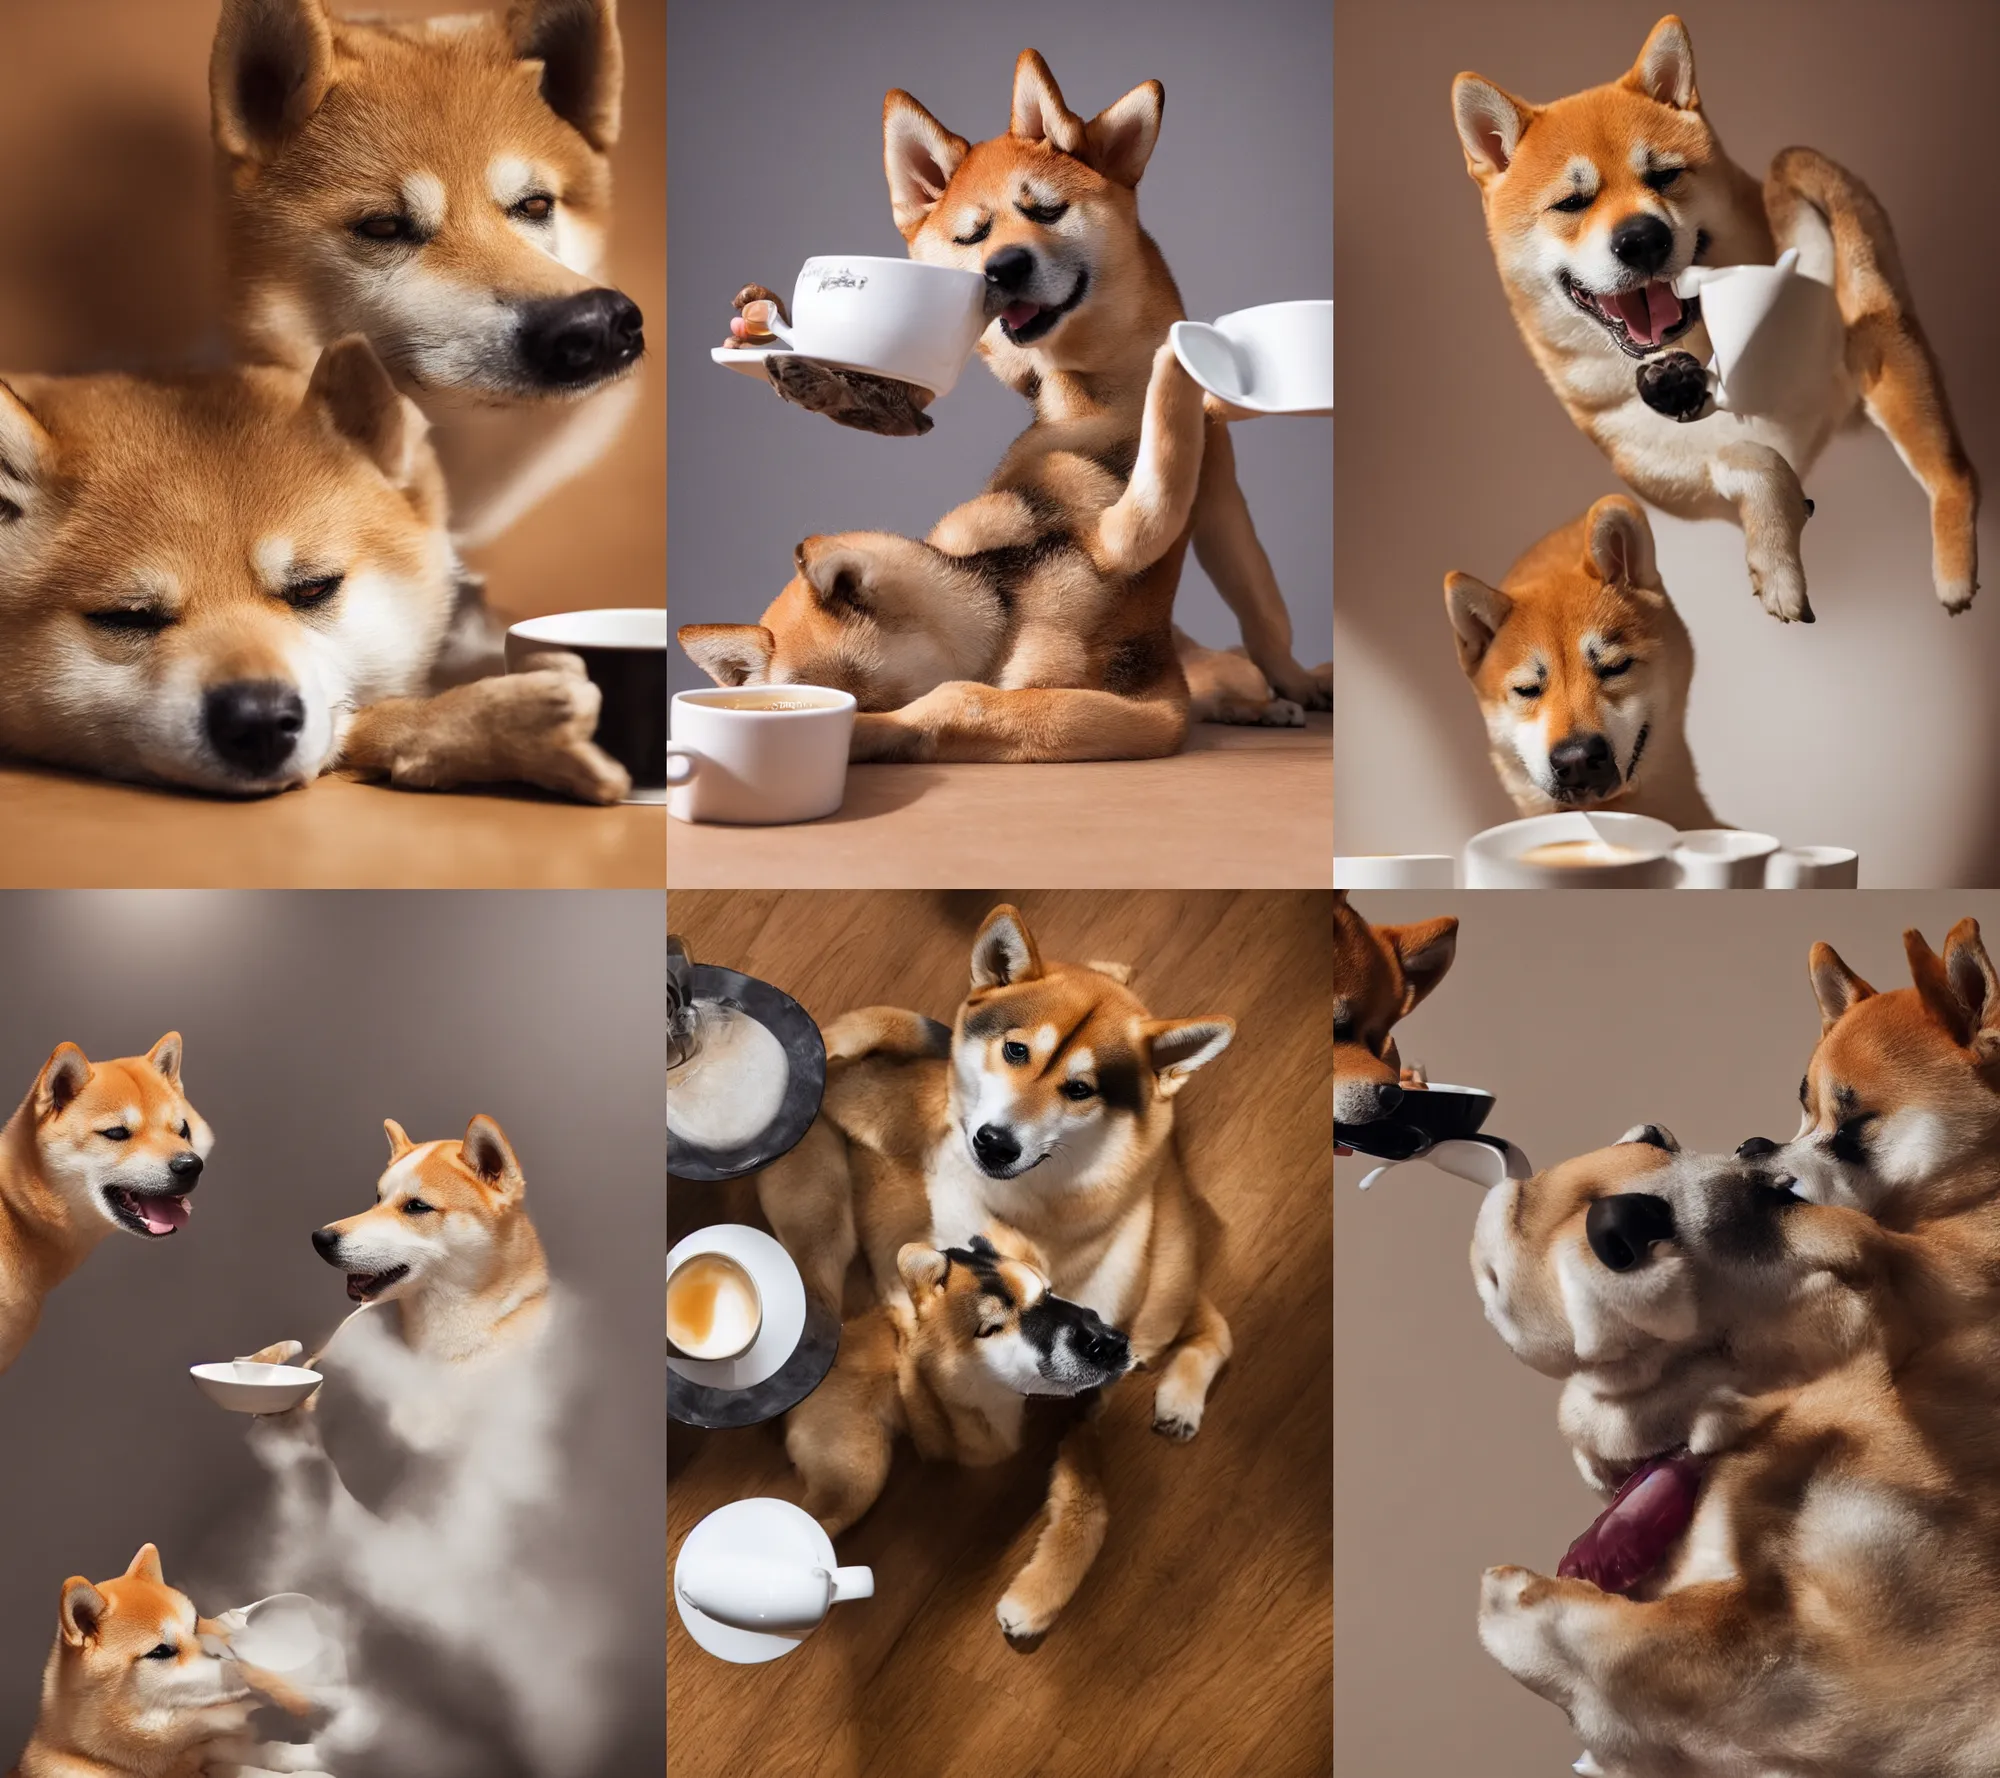 Prompt: Photograph of a Shiba Inu dog drinking coffee, studio lighting